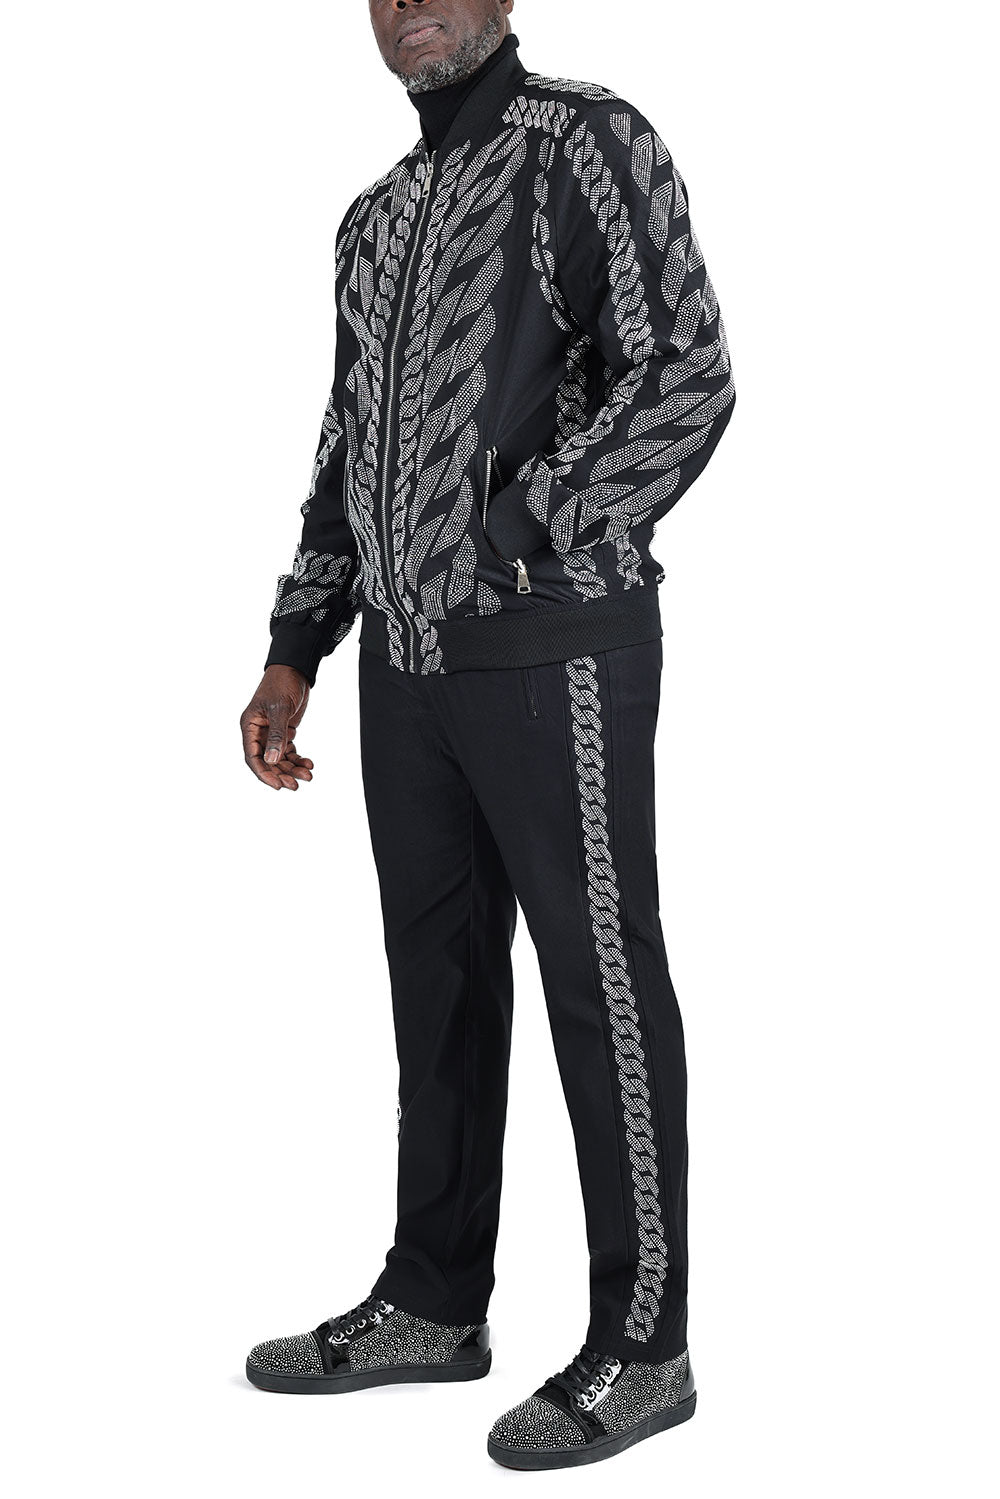 Barabas Men's Chain Rhinestone Pattern Design Luxury Loungewear 2STM13 Black Silver